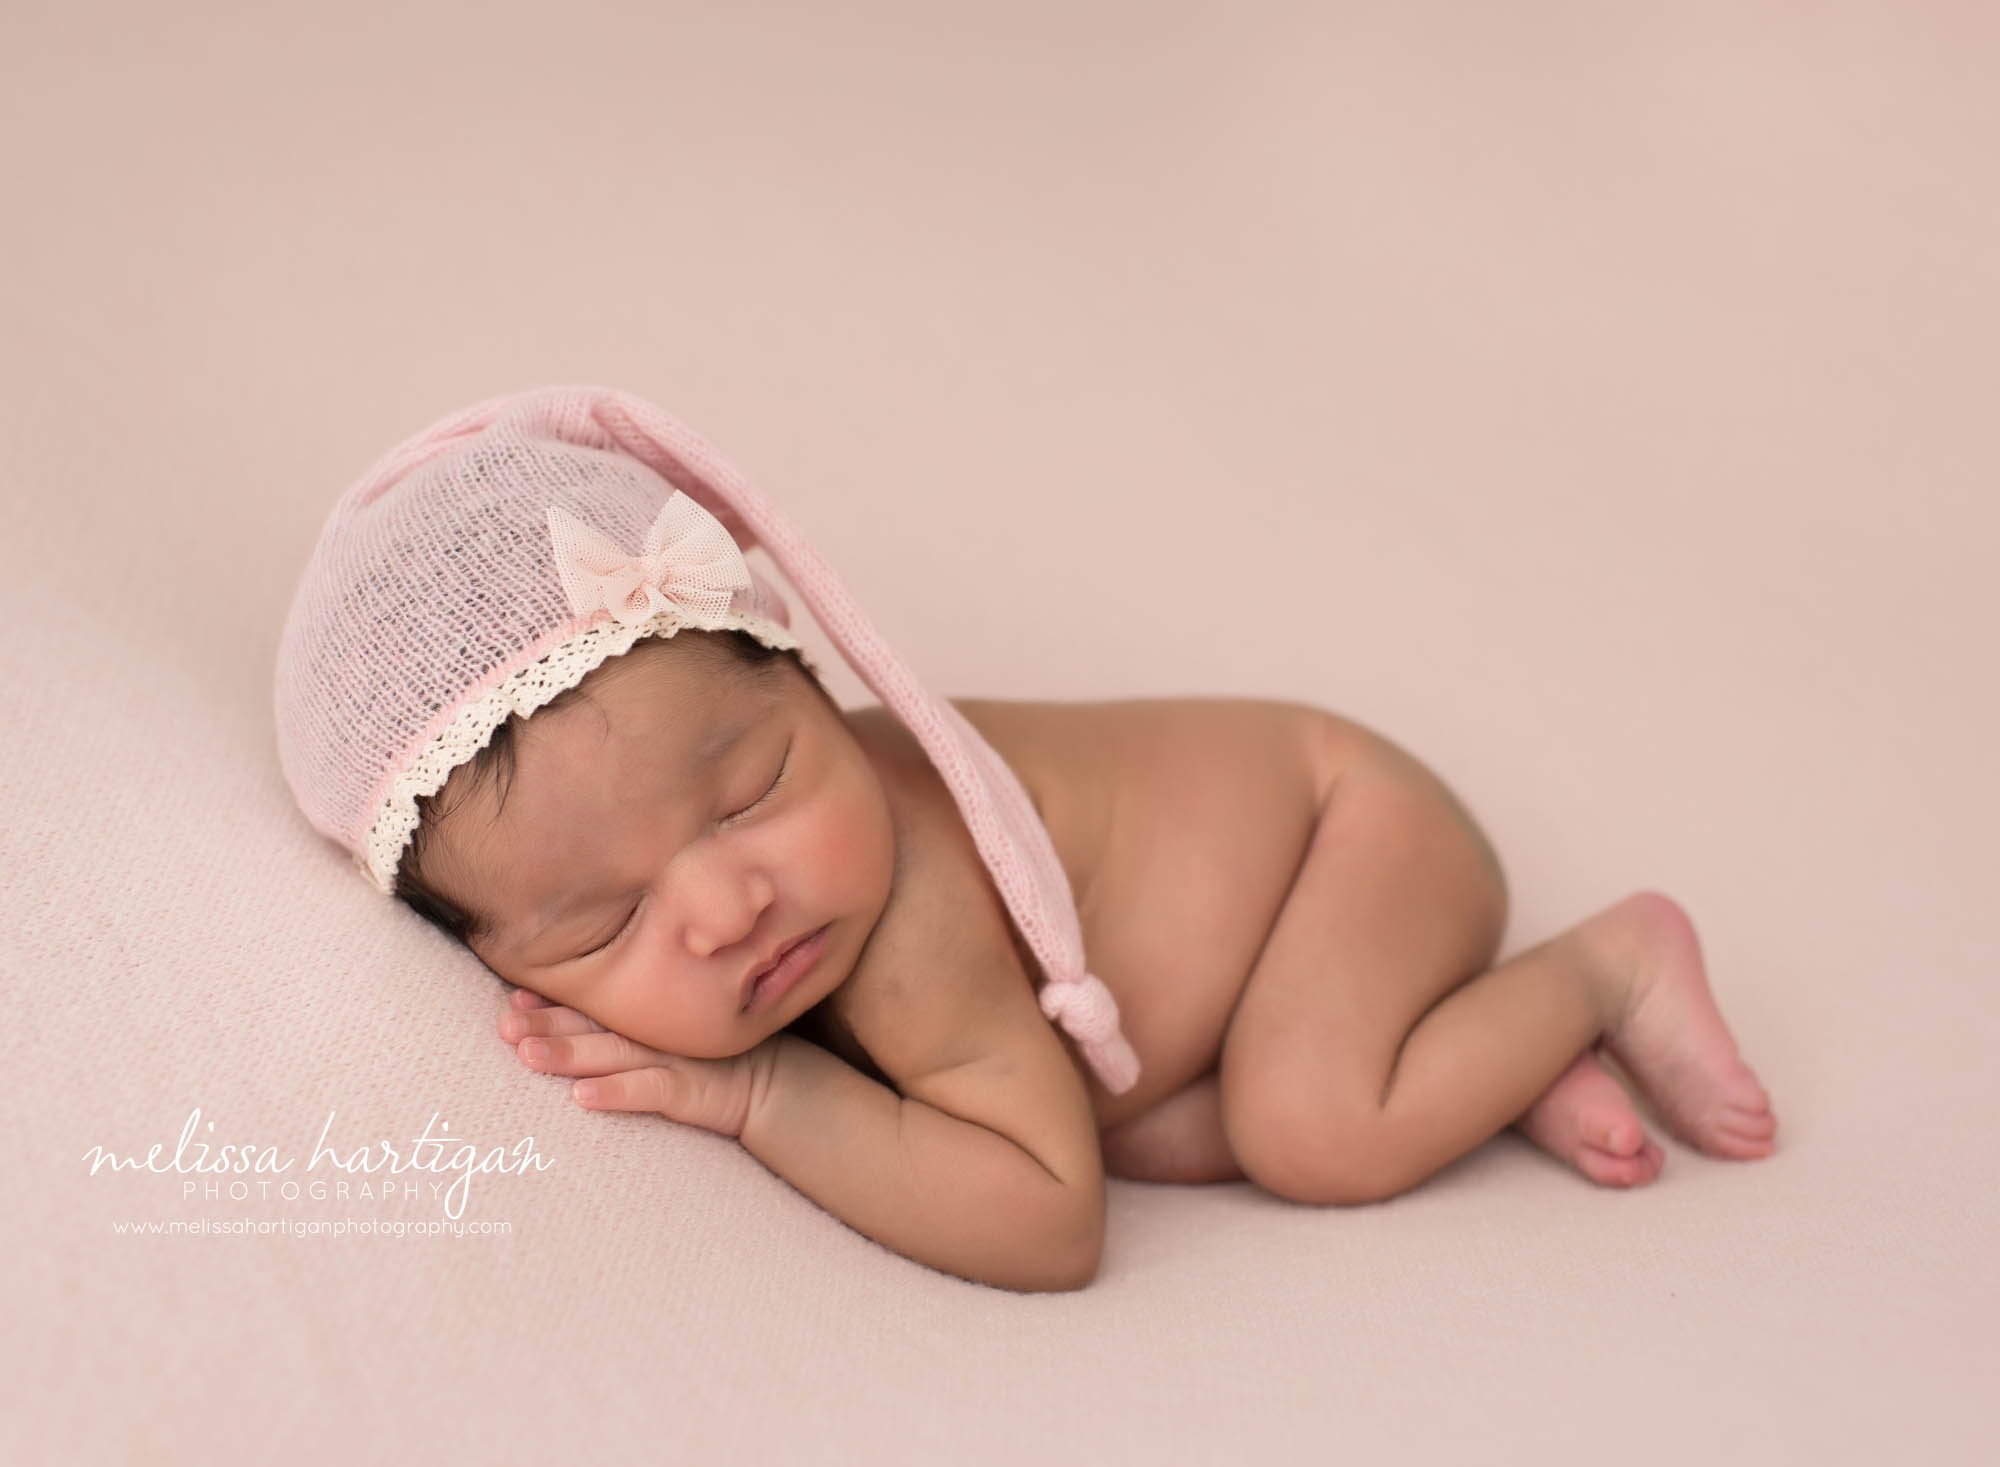 newborn baby girl posed on tummy wearing pink lace sleepy cap